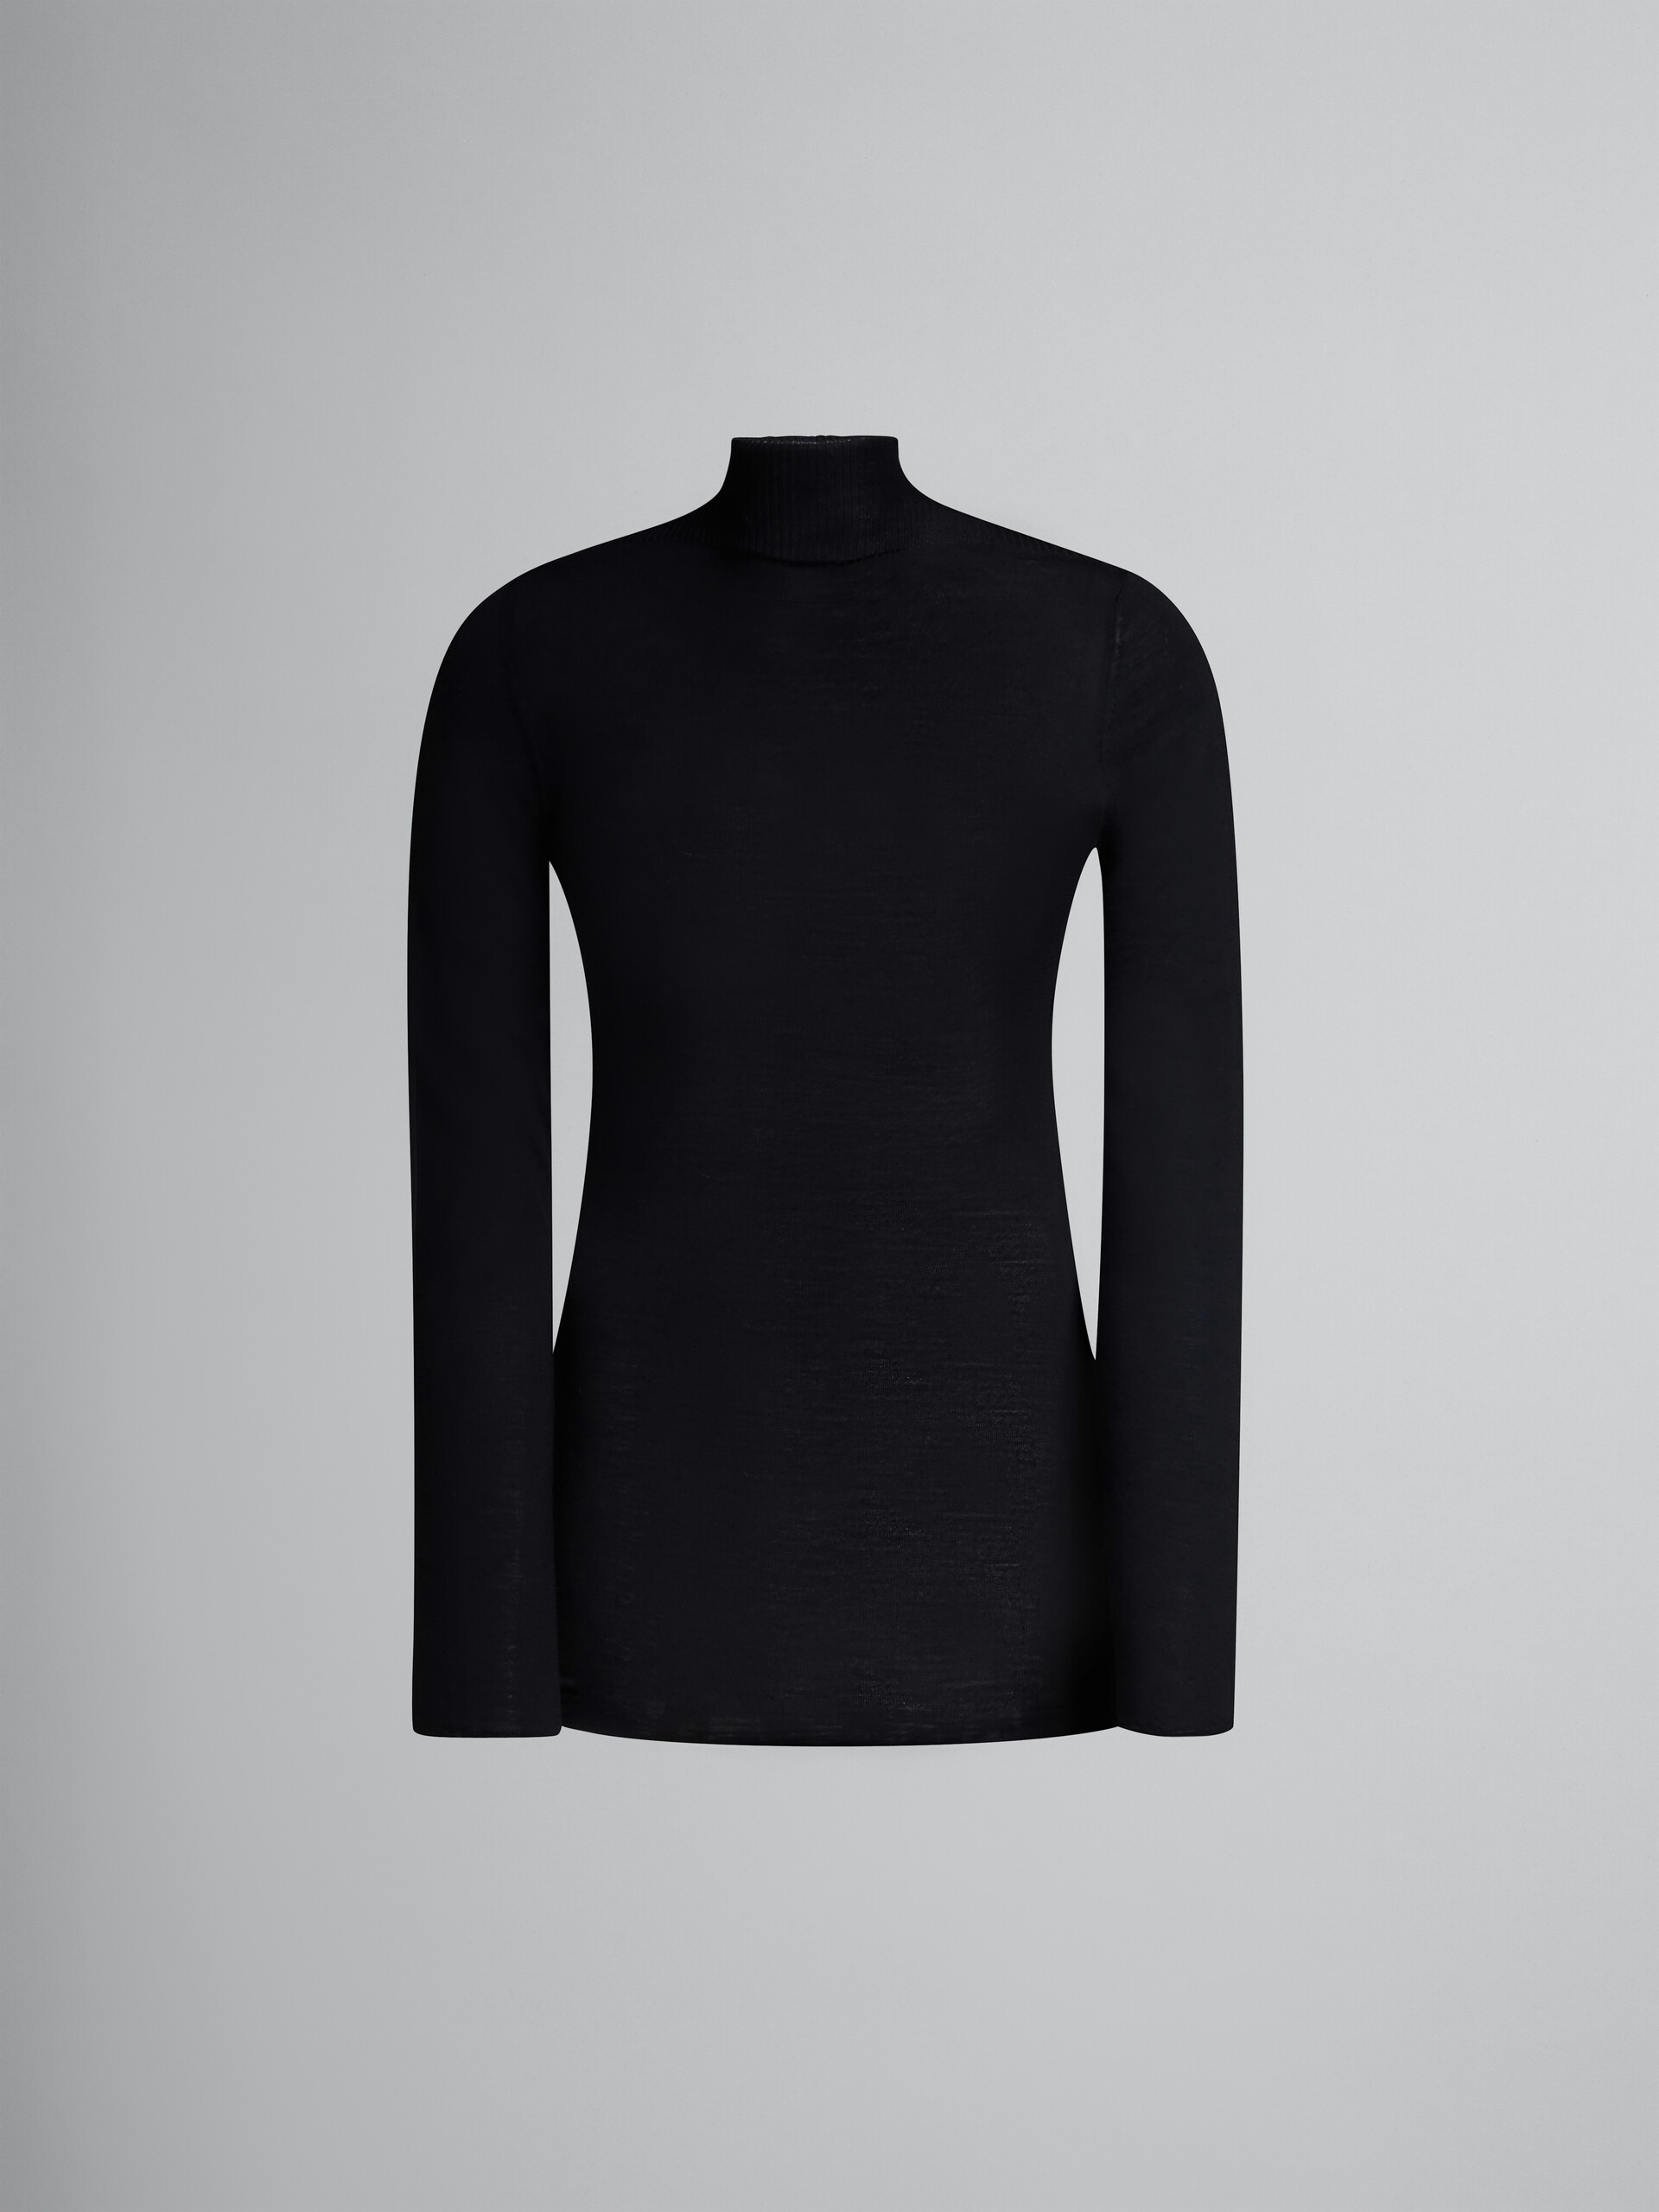 Black wool turtleneck jumper - Pullovers - Image 1